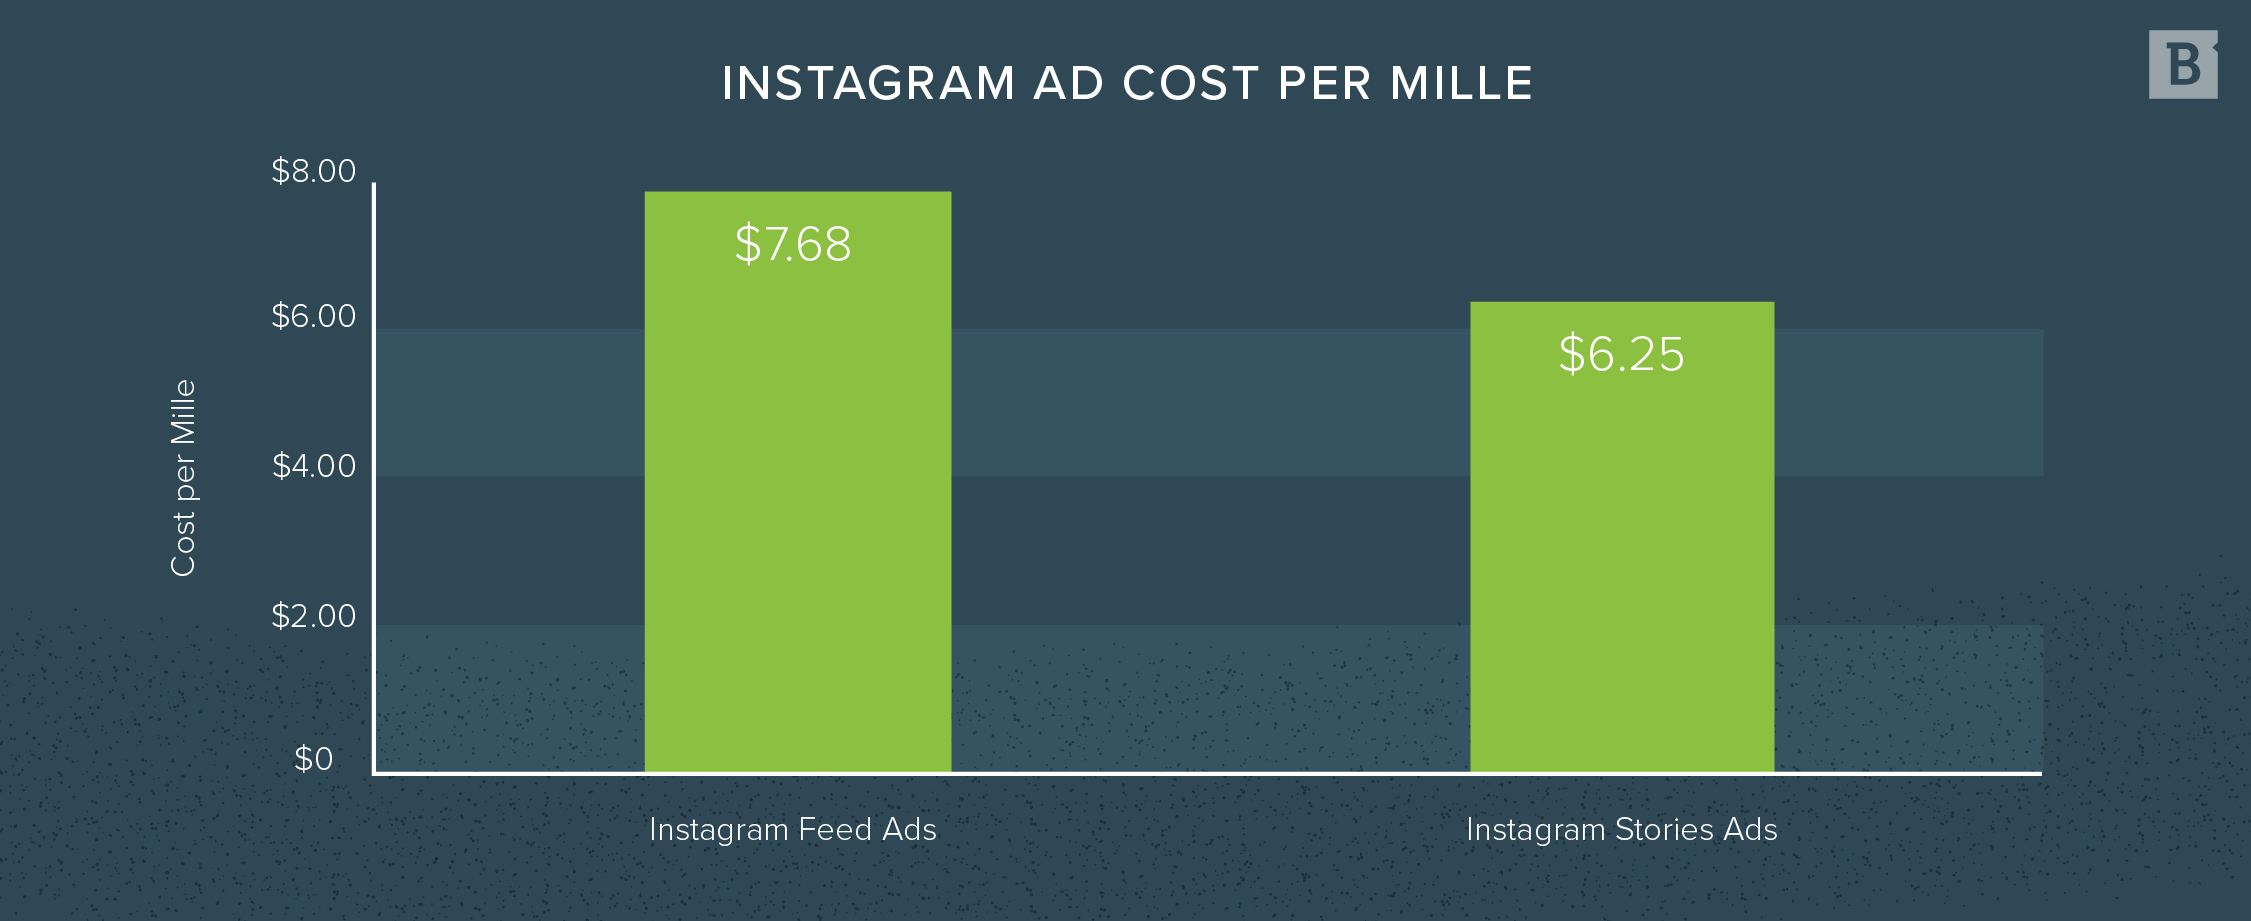 Instagram ad cost per mille